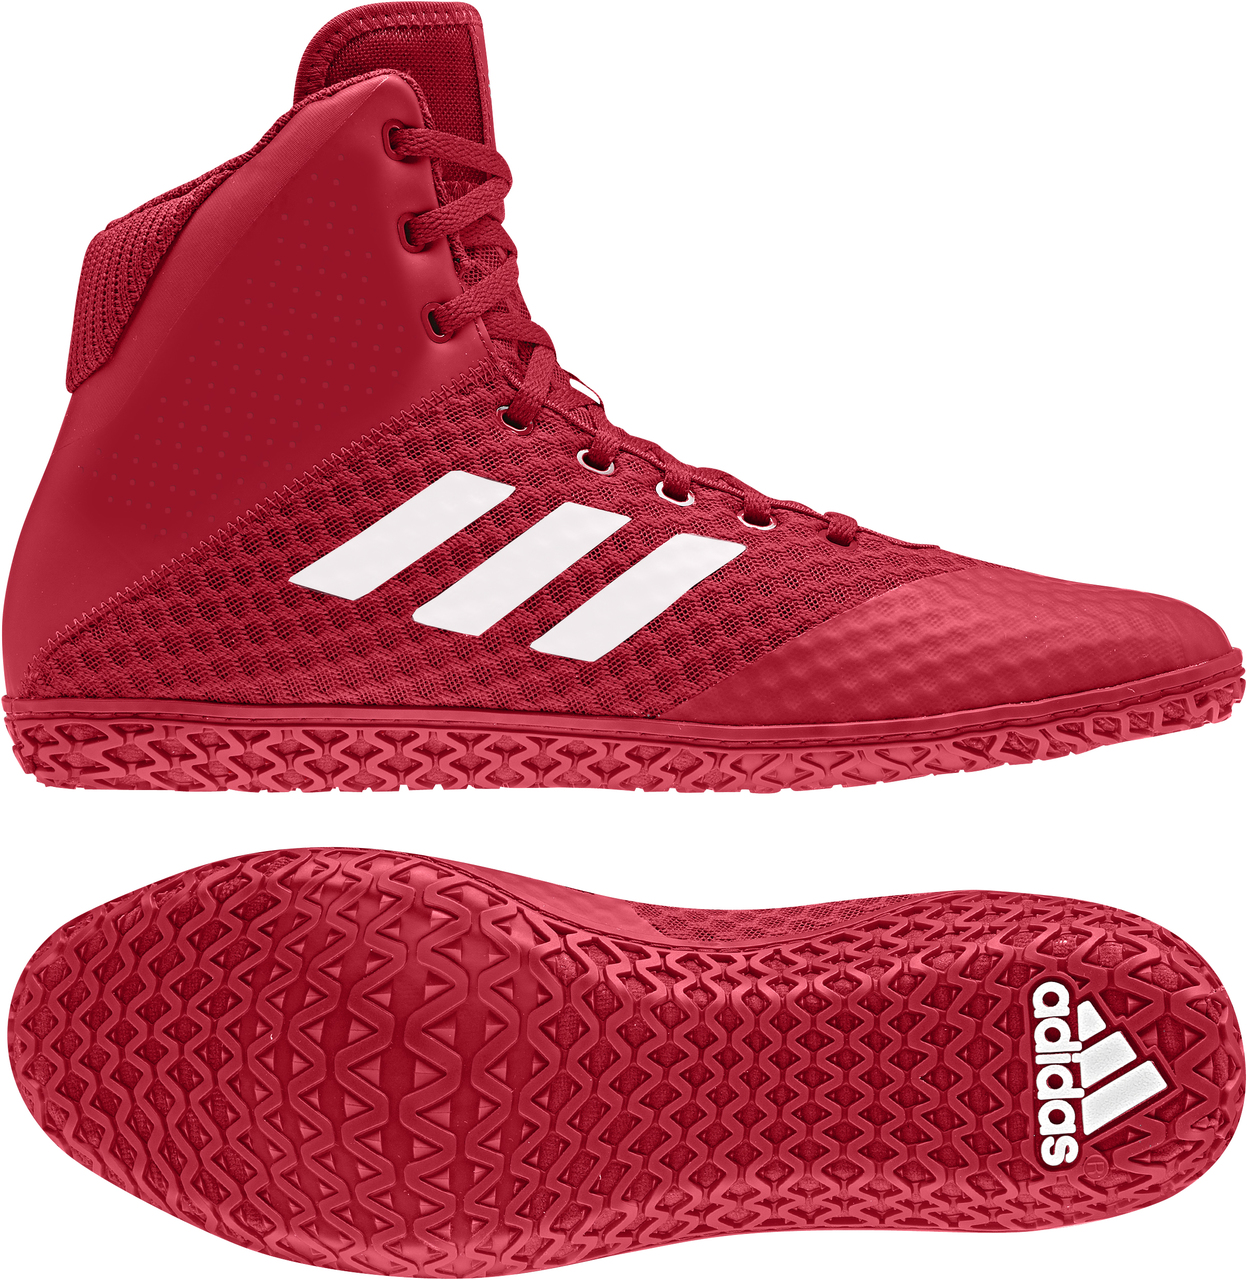 adidas david taylor wrestling shoes